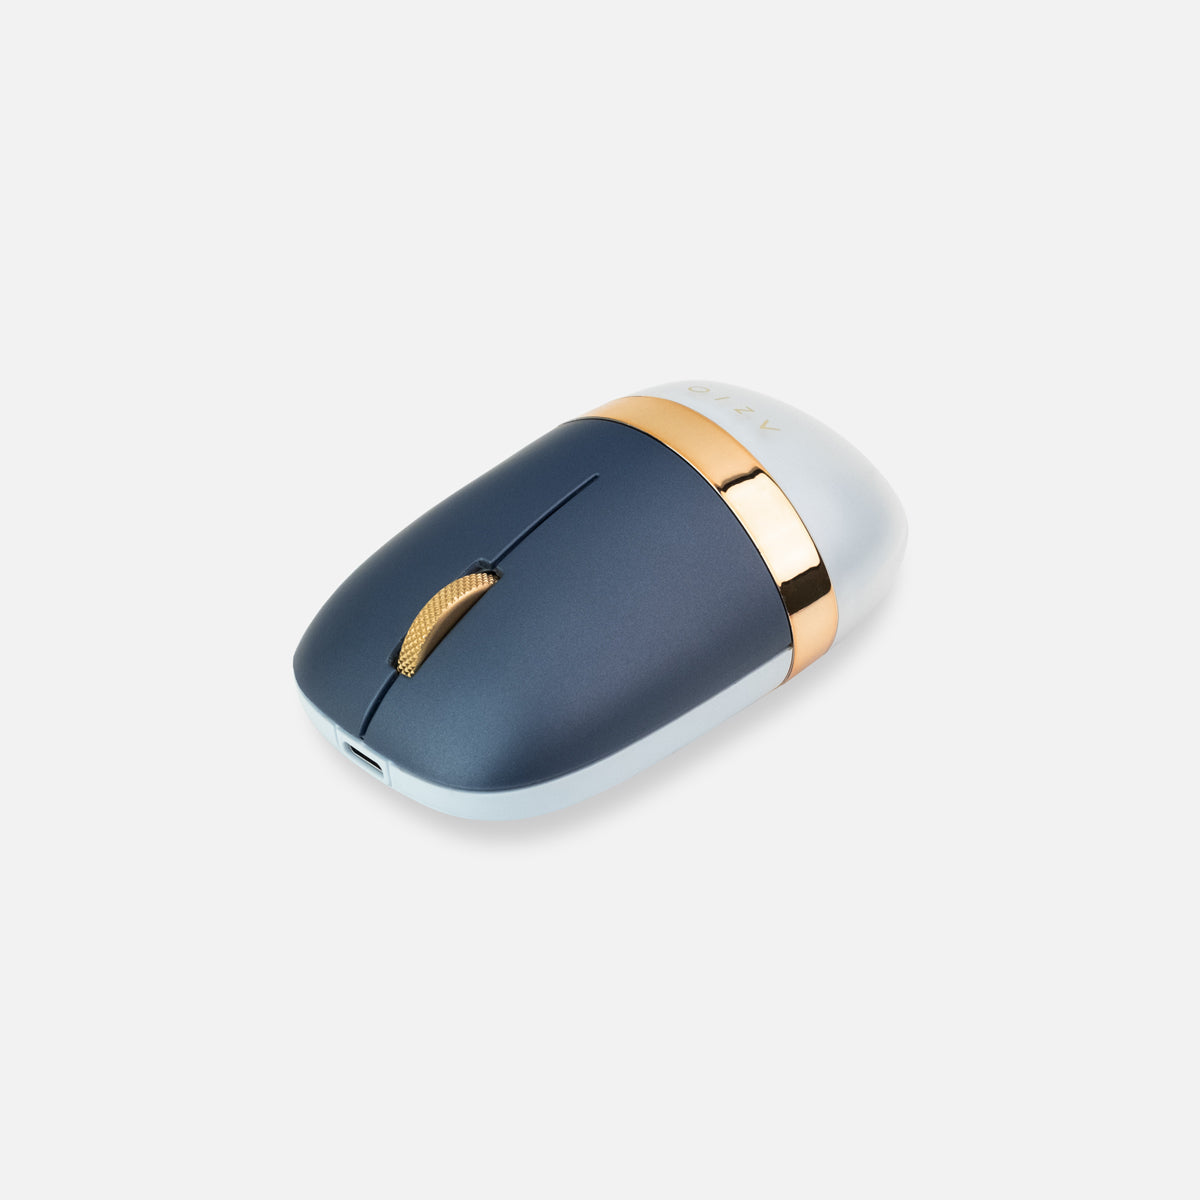 IZO Wireless Mouse